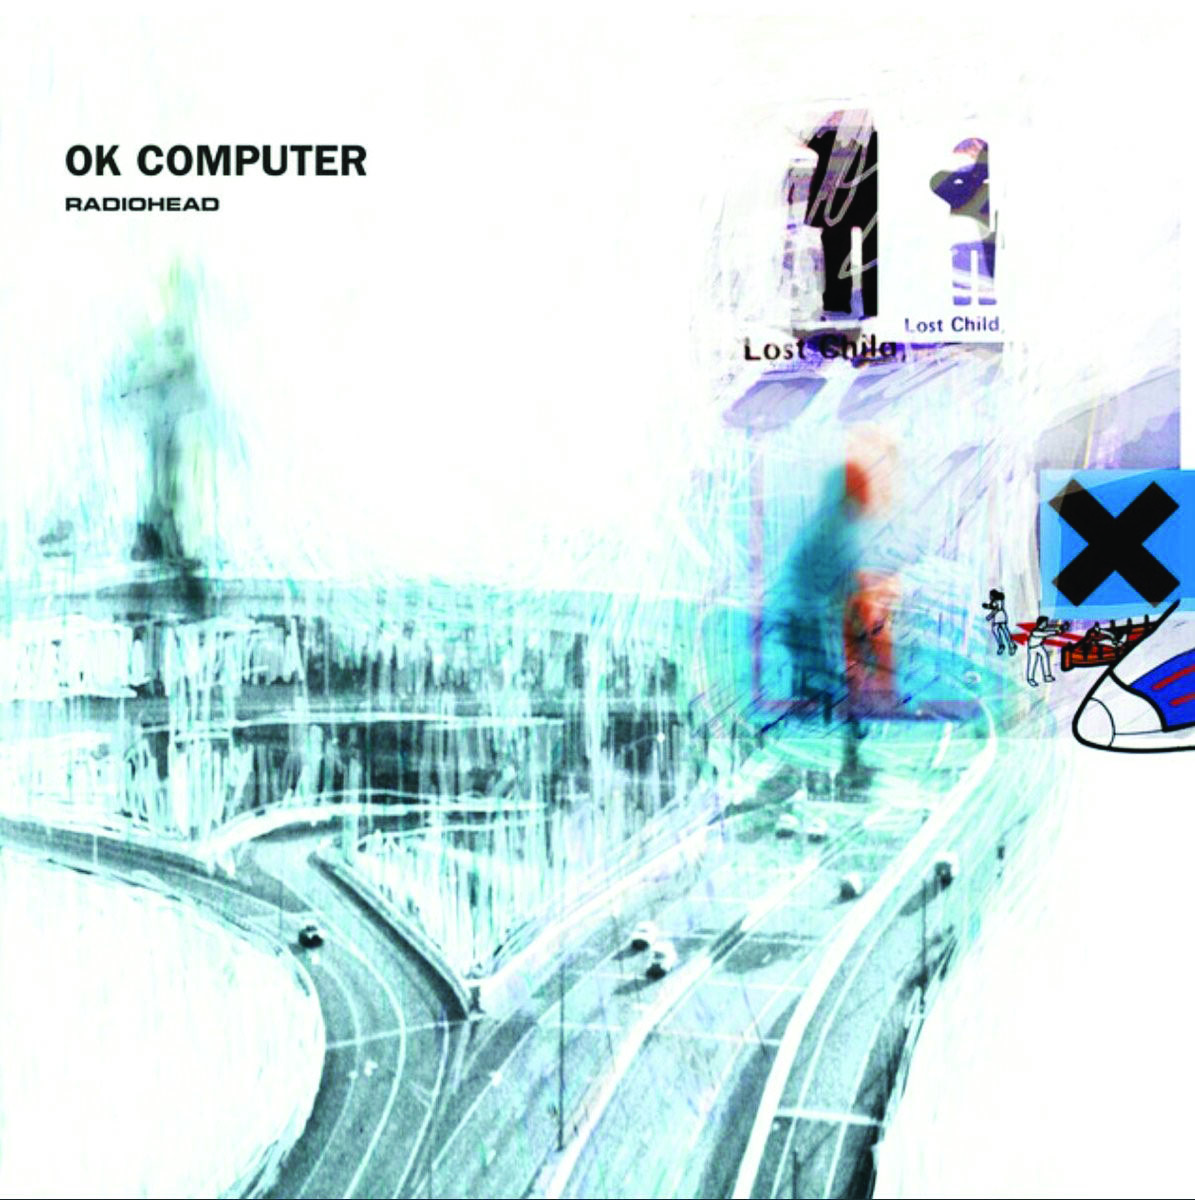 The+album+cover+to+Radioheads+Ok+Computer